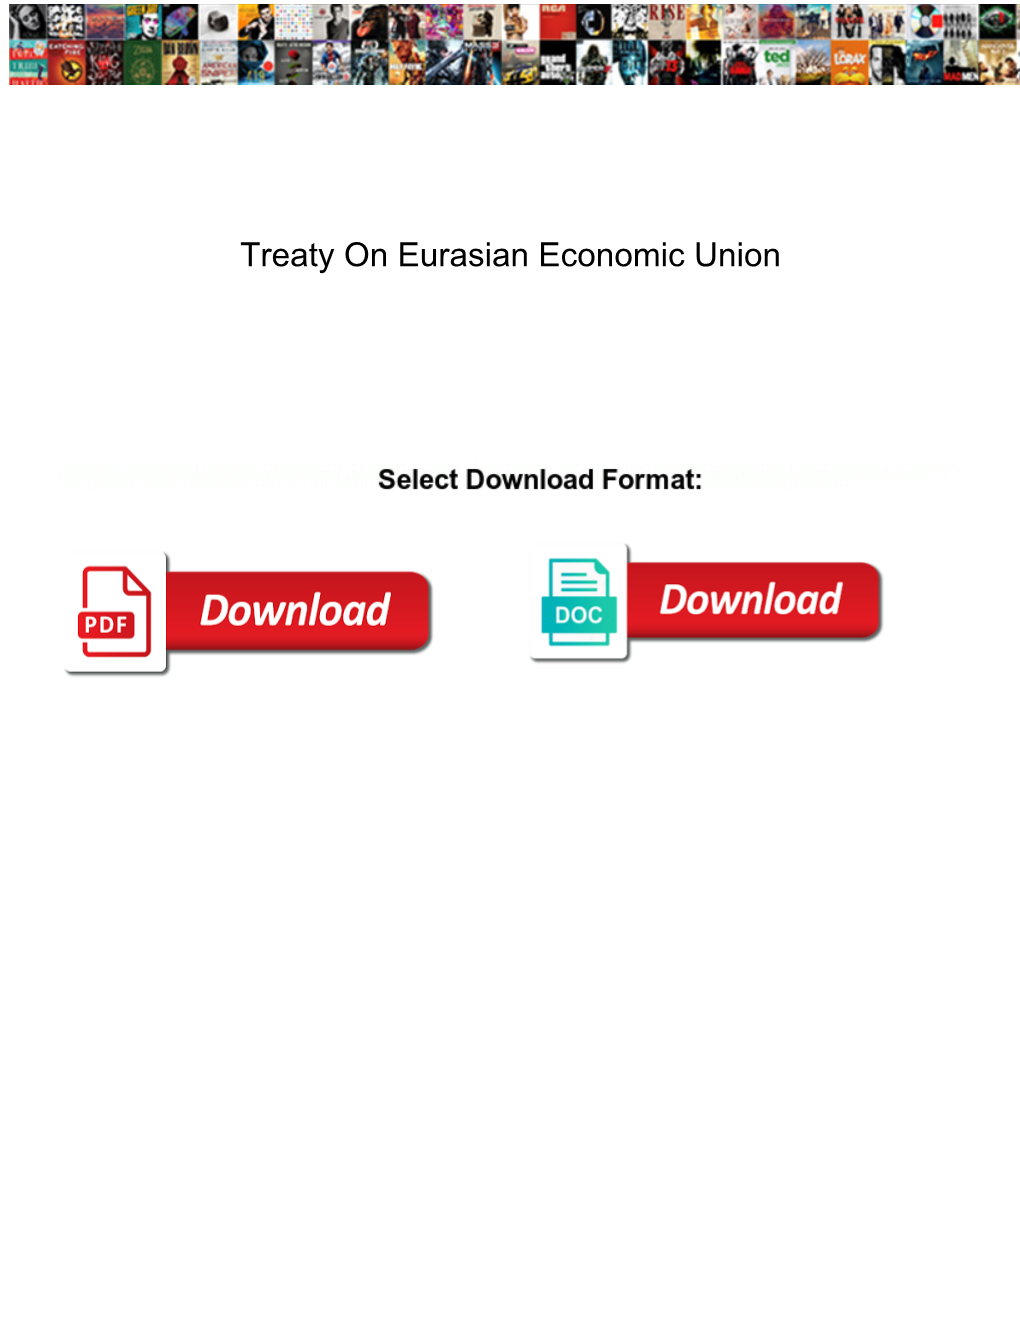 Treaty on Eurasian Economic Union